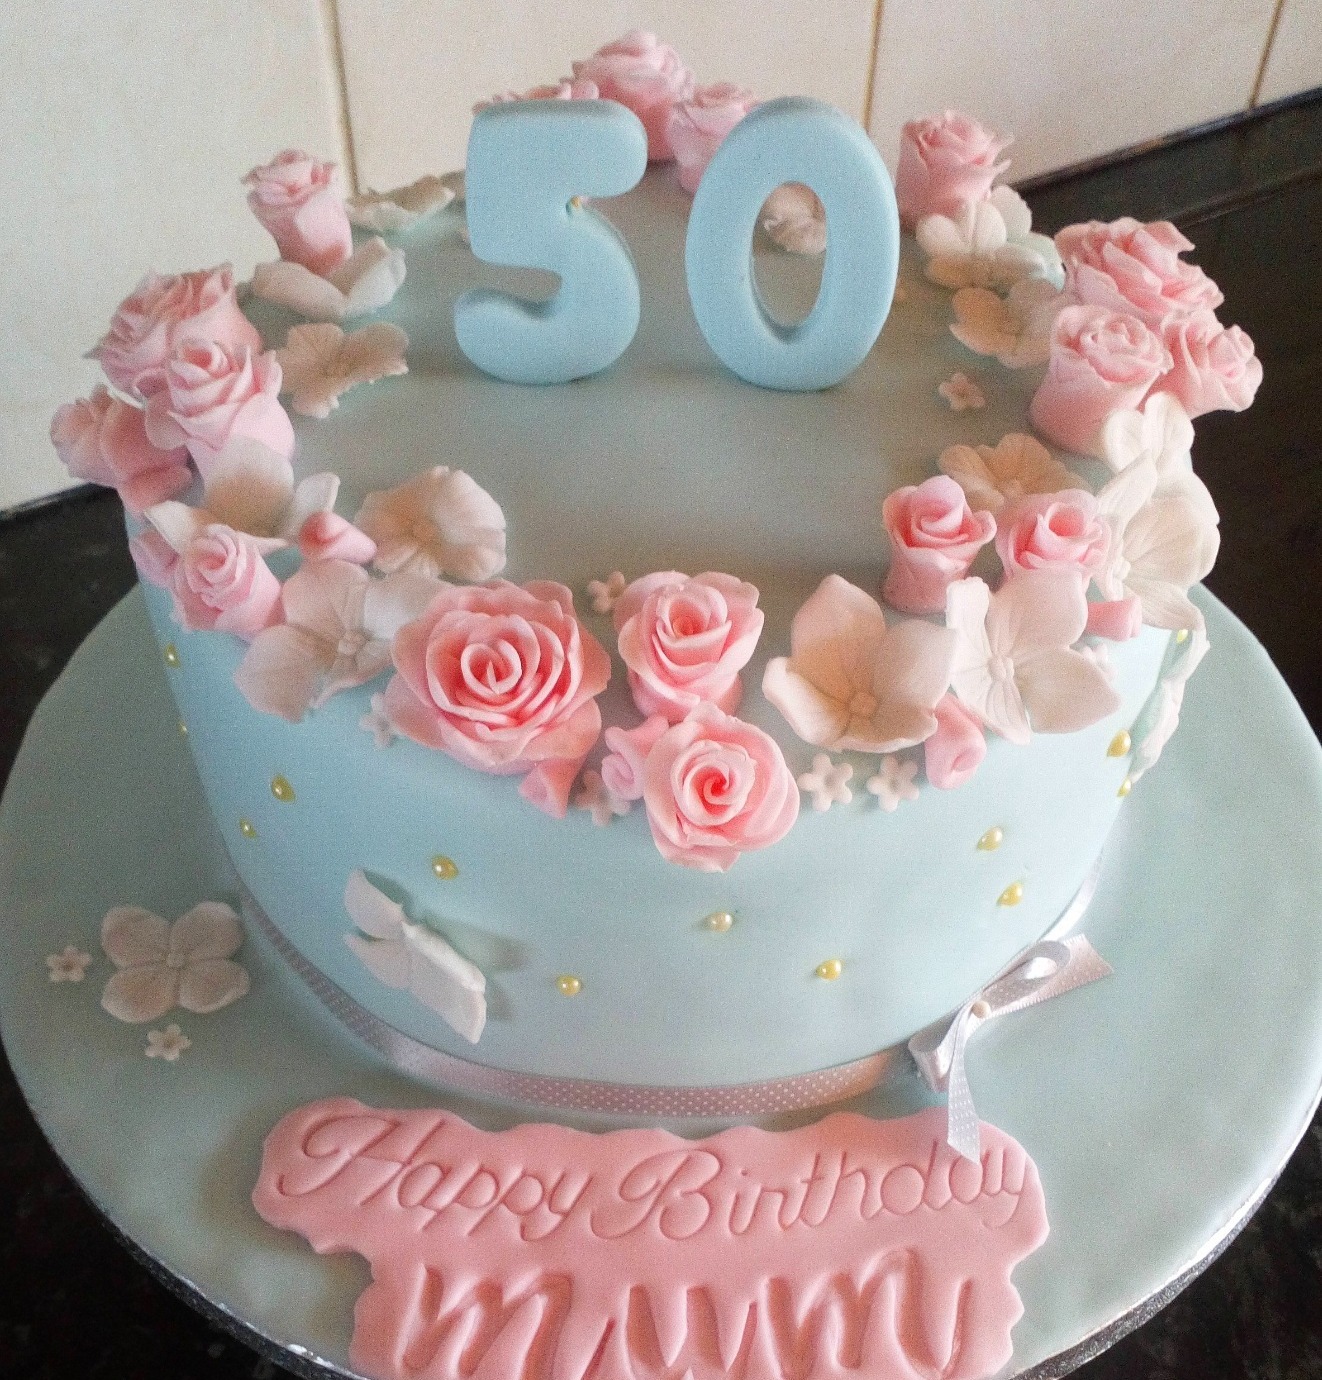 Blue birthday cake with pink handmade roses